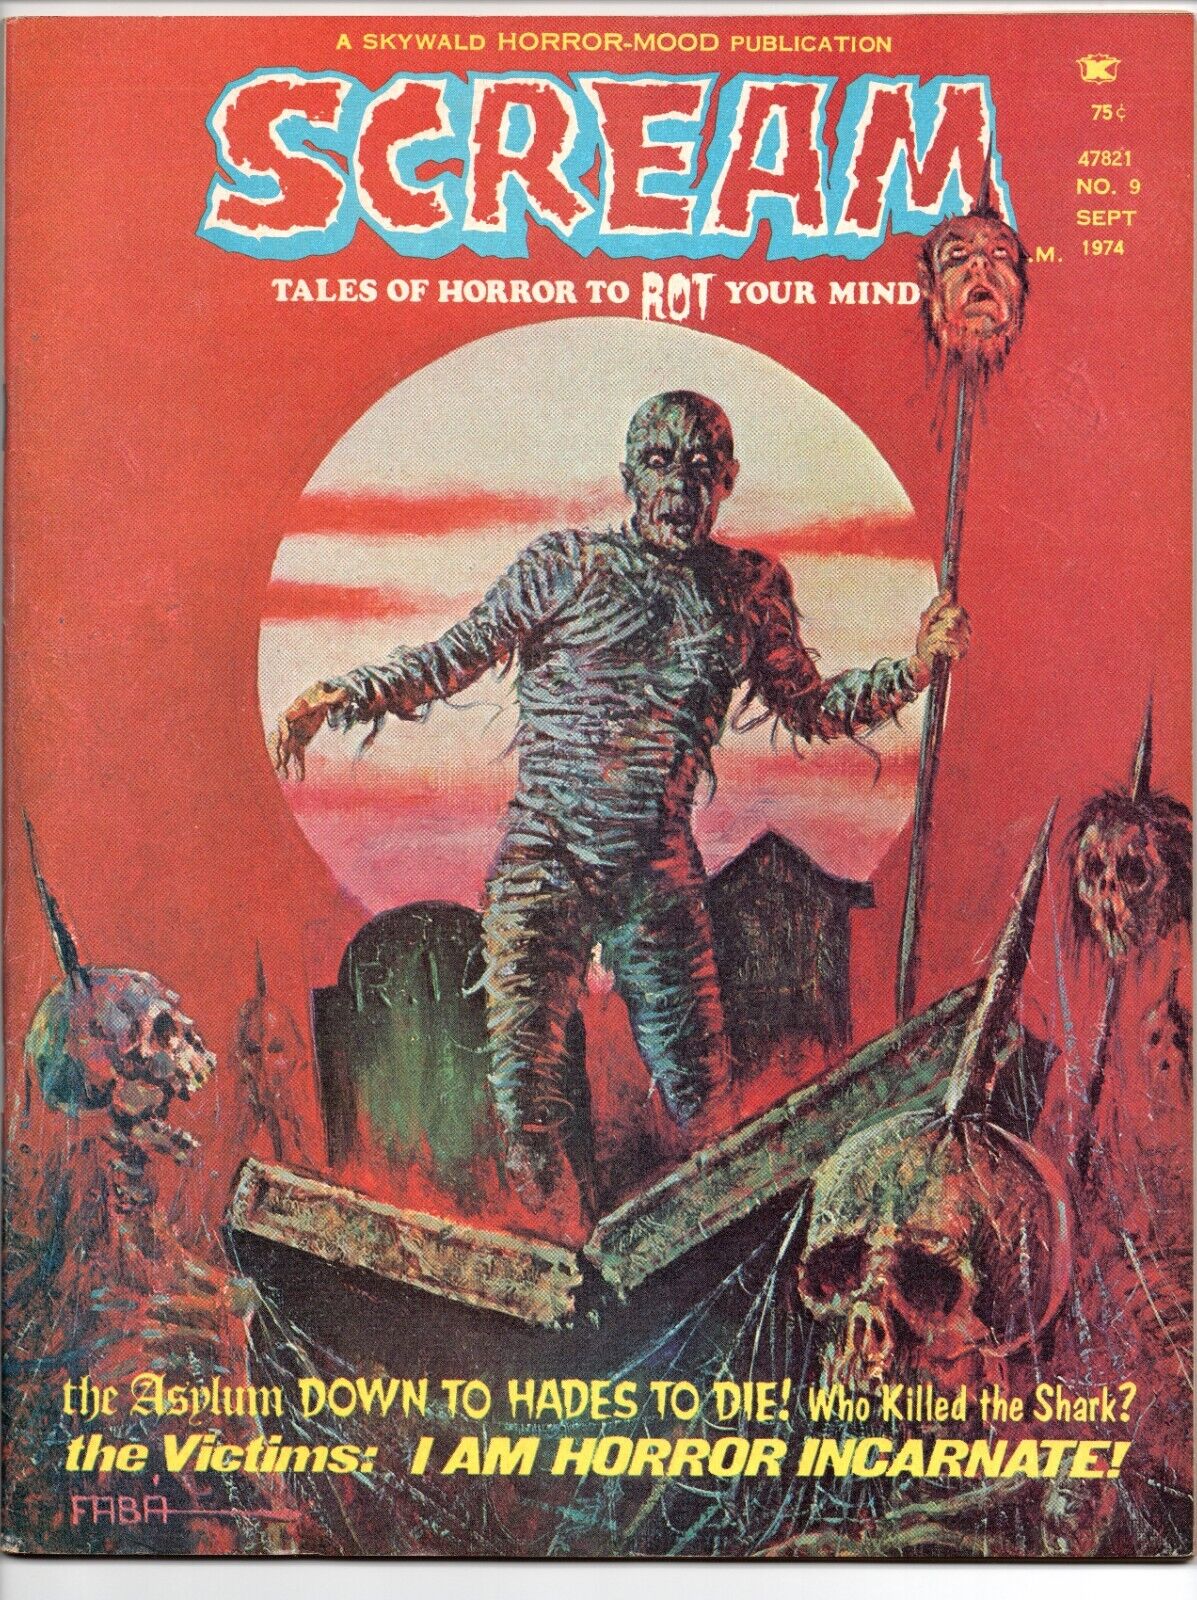 SCREAM #9 Sept. 1974 E.A.Poe, Suso US comic book SKYWALD HORROR MOOD magazine VF